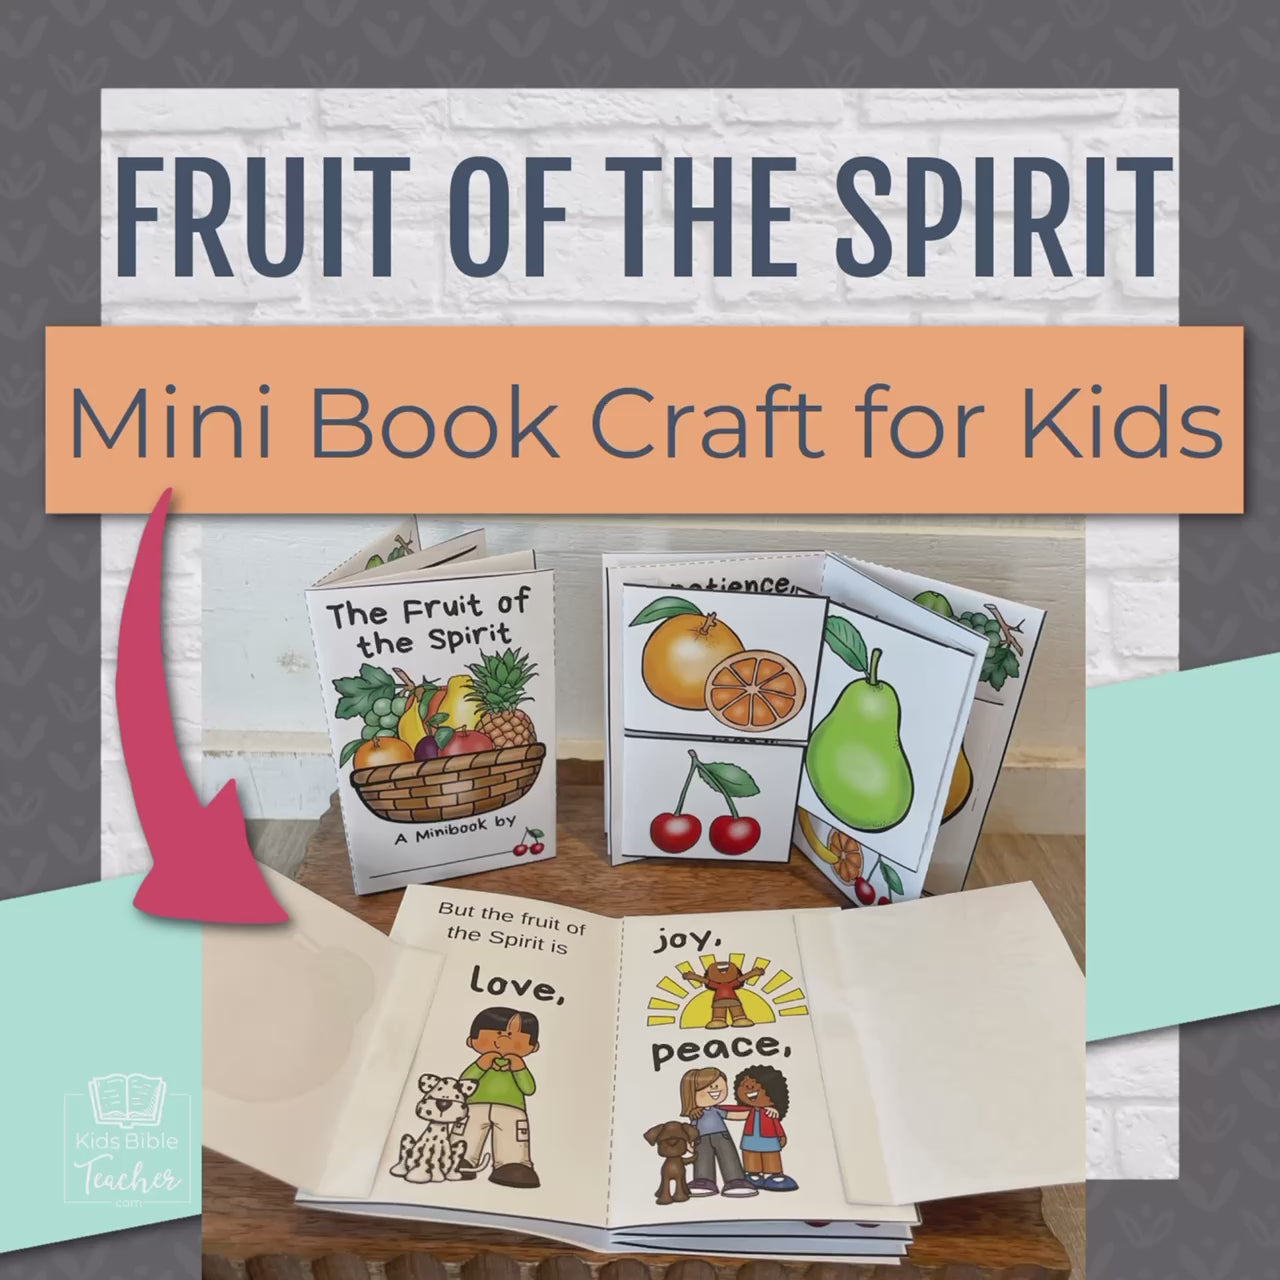 Fruit of the Spirit Mini Book Craft for Kids featuring Galatians 5:22-23